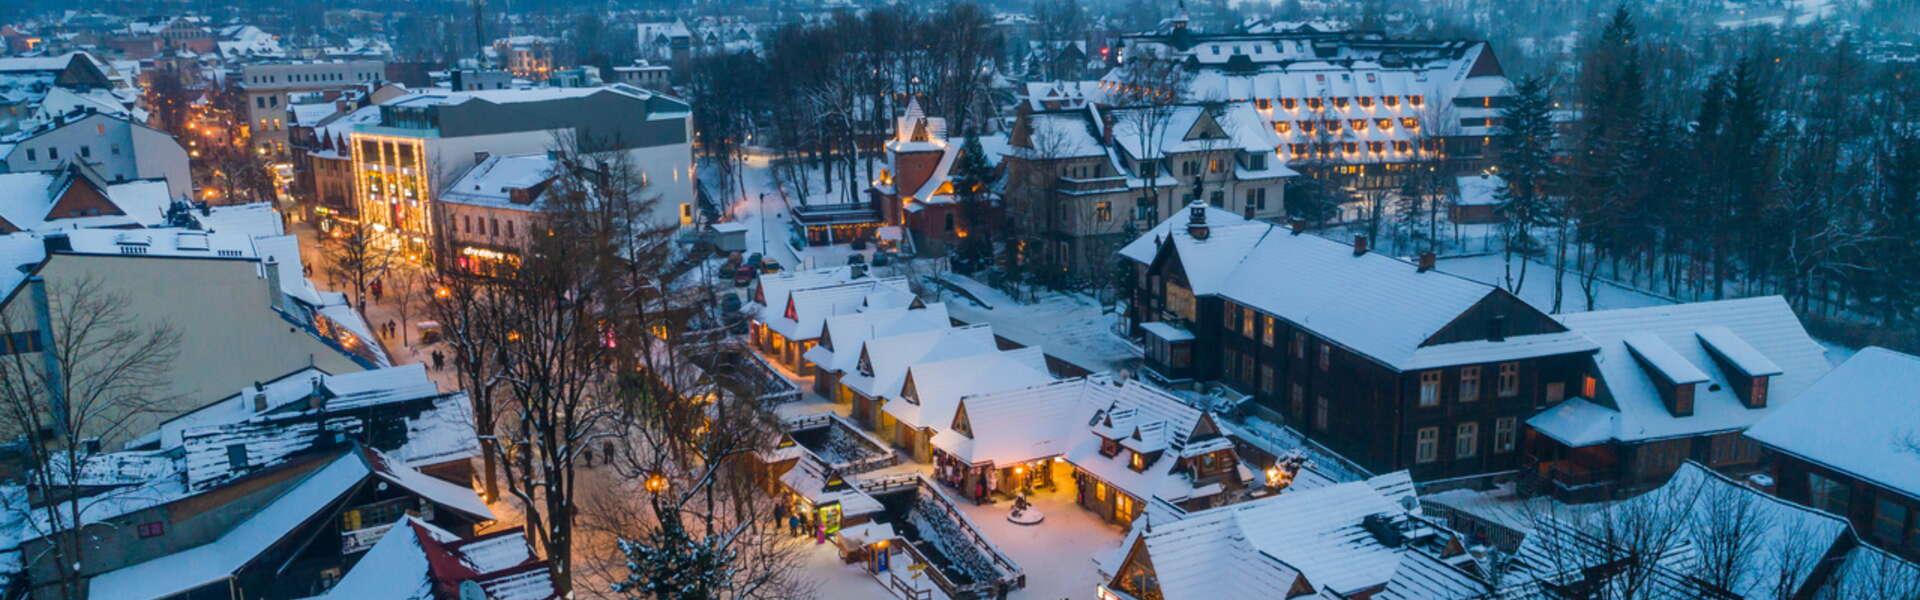 Widok na miasto Zakopane zimą.